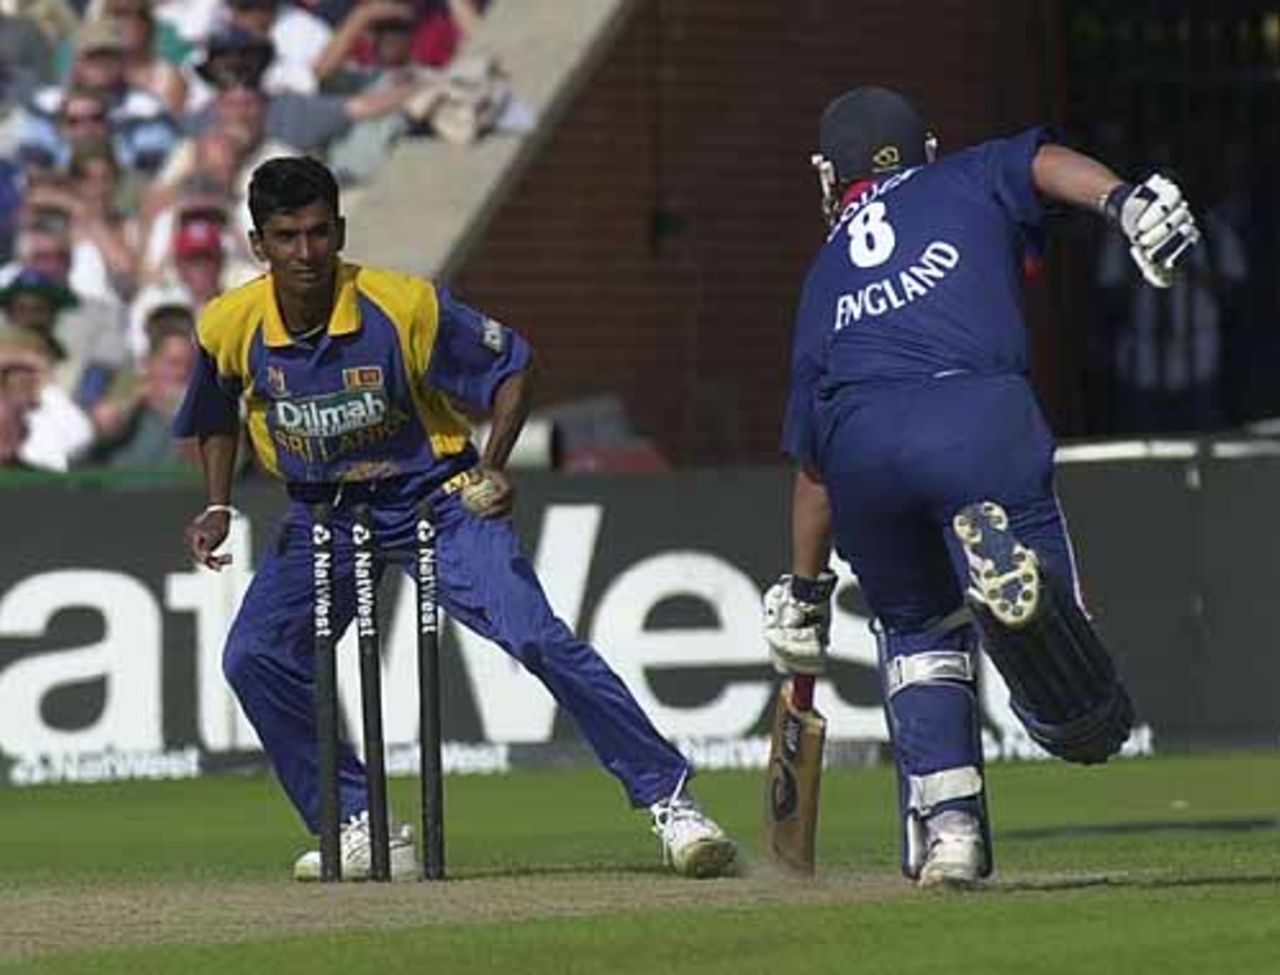 Chandana runs out Darren Gough and Sri Lanka win by 23 runs, England v Sri Lanka at Manchester, July 2002